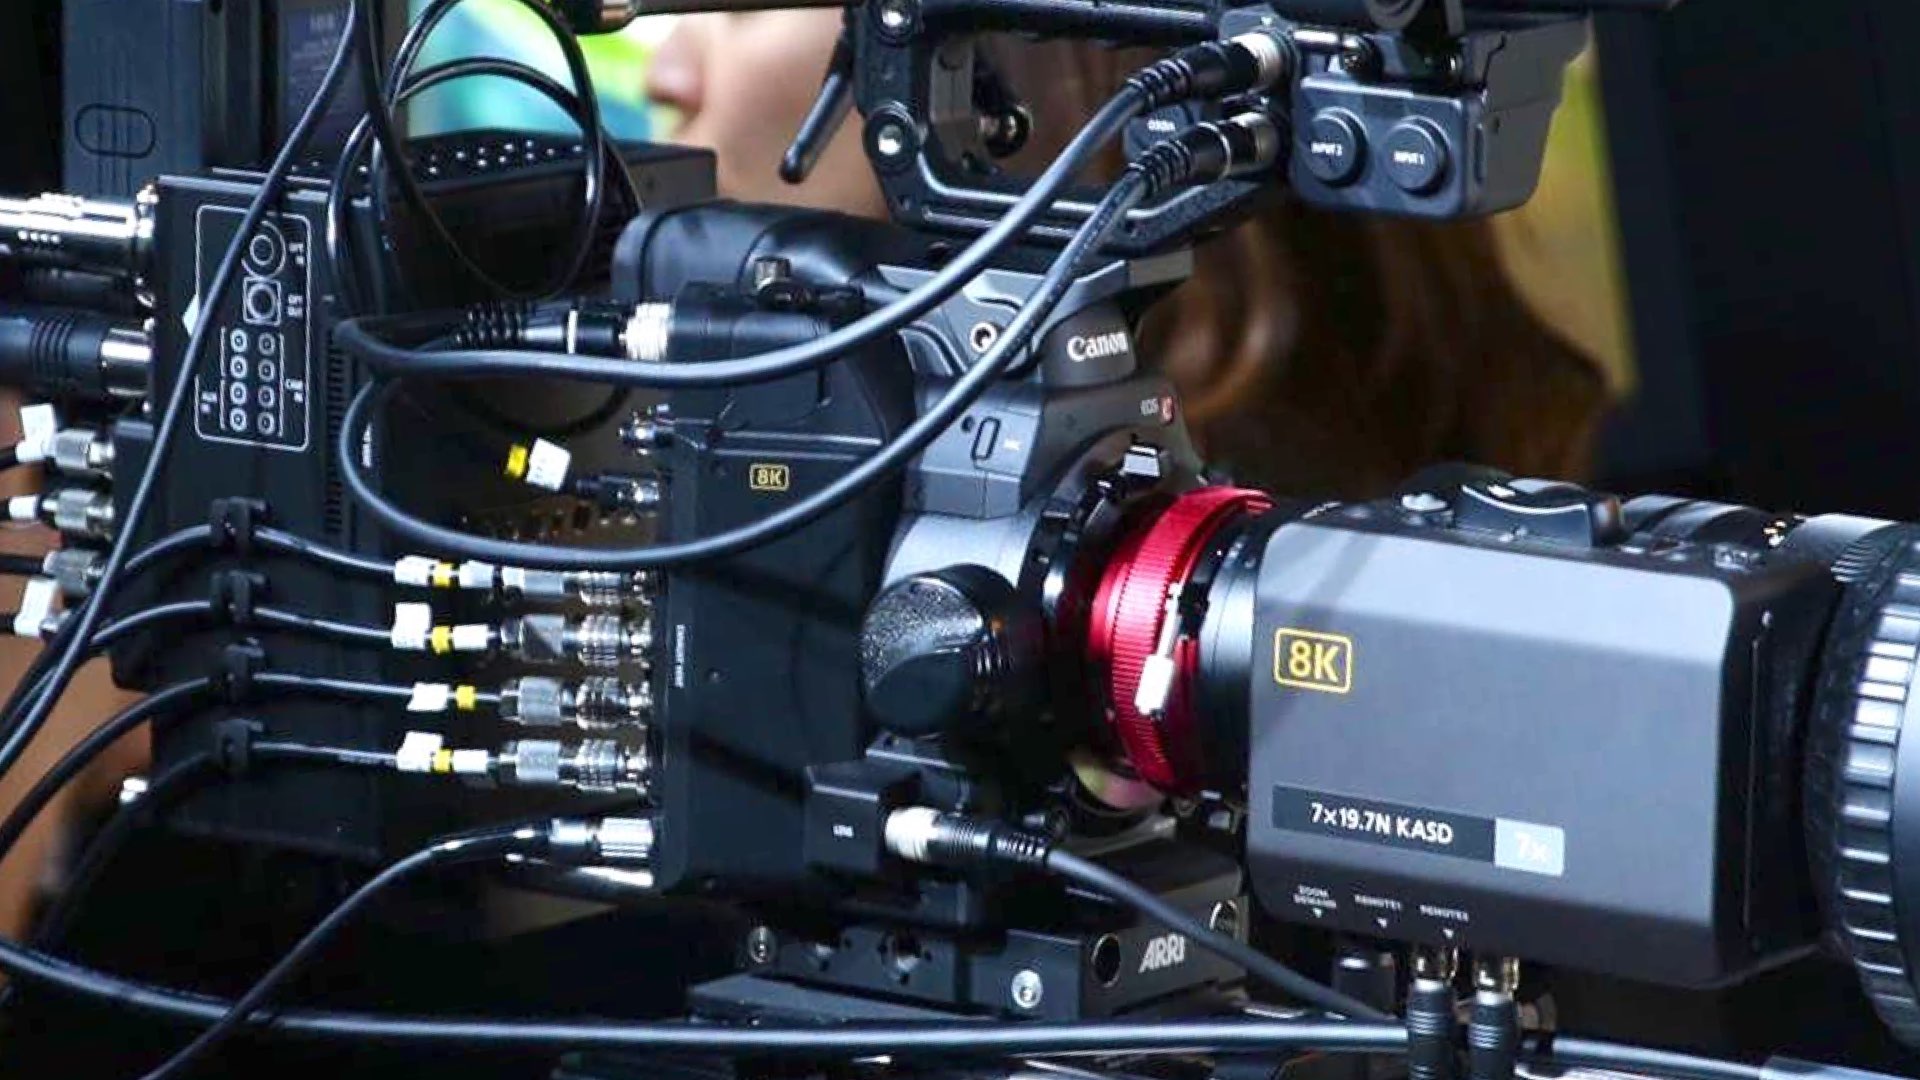 Canon Shows Off Its Upcoming Eos 8k Cinema Camera Footage Y M Cinema News Insights On Digital Cinema